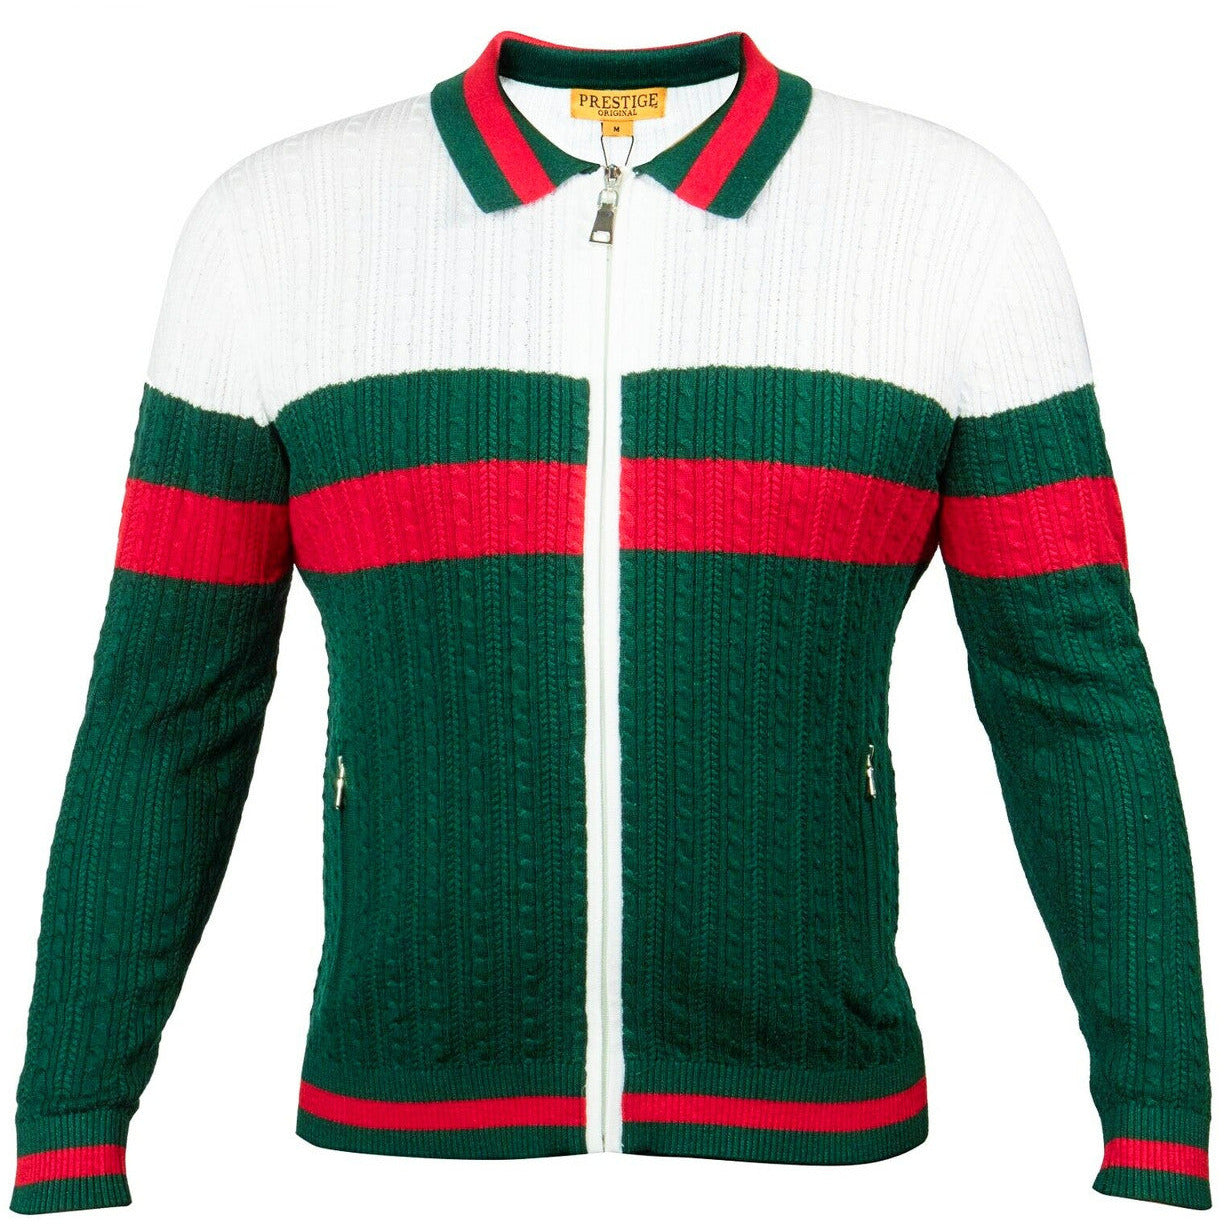 Prestige White Green Red Zip Sweater Jacket